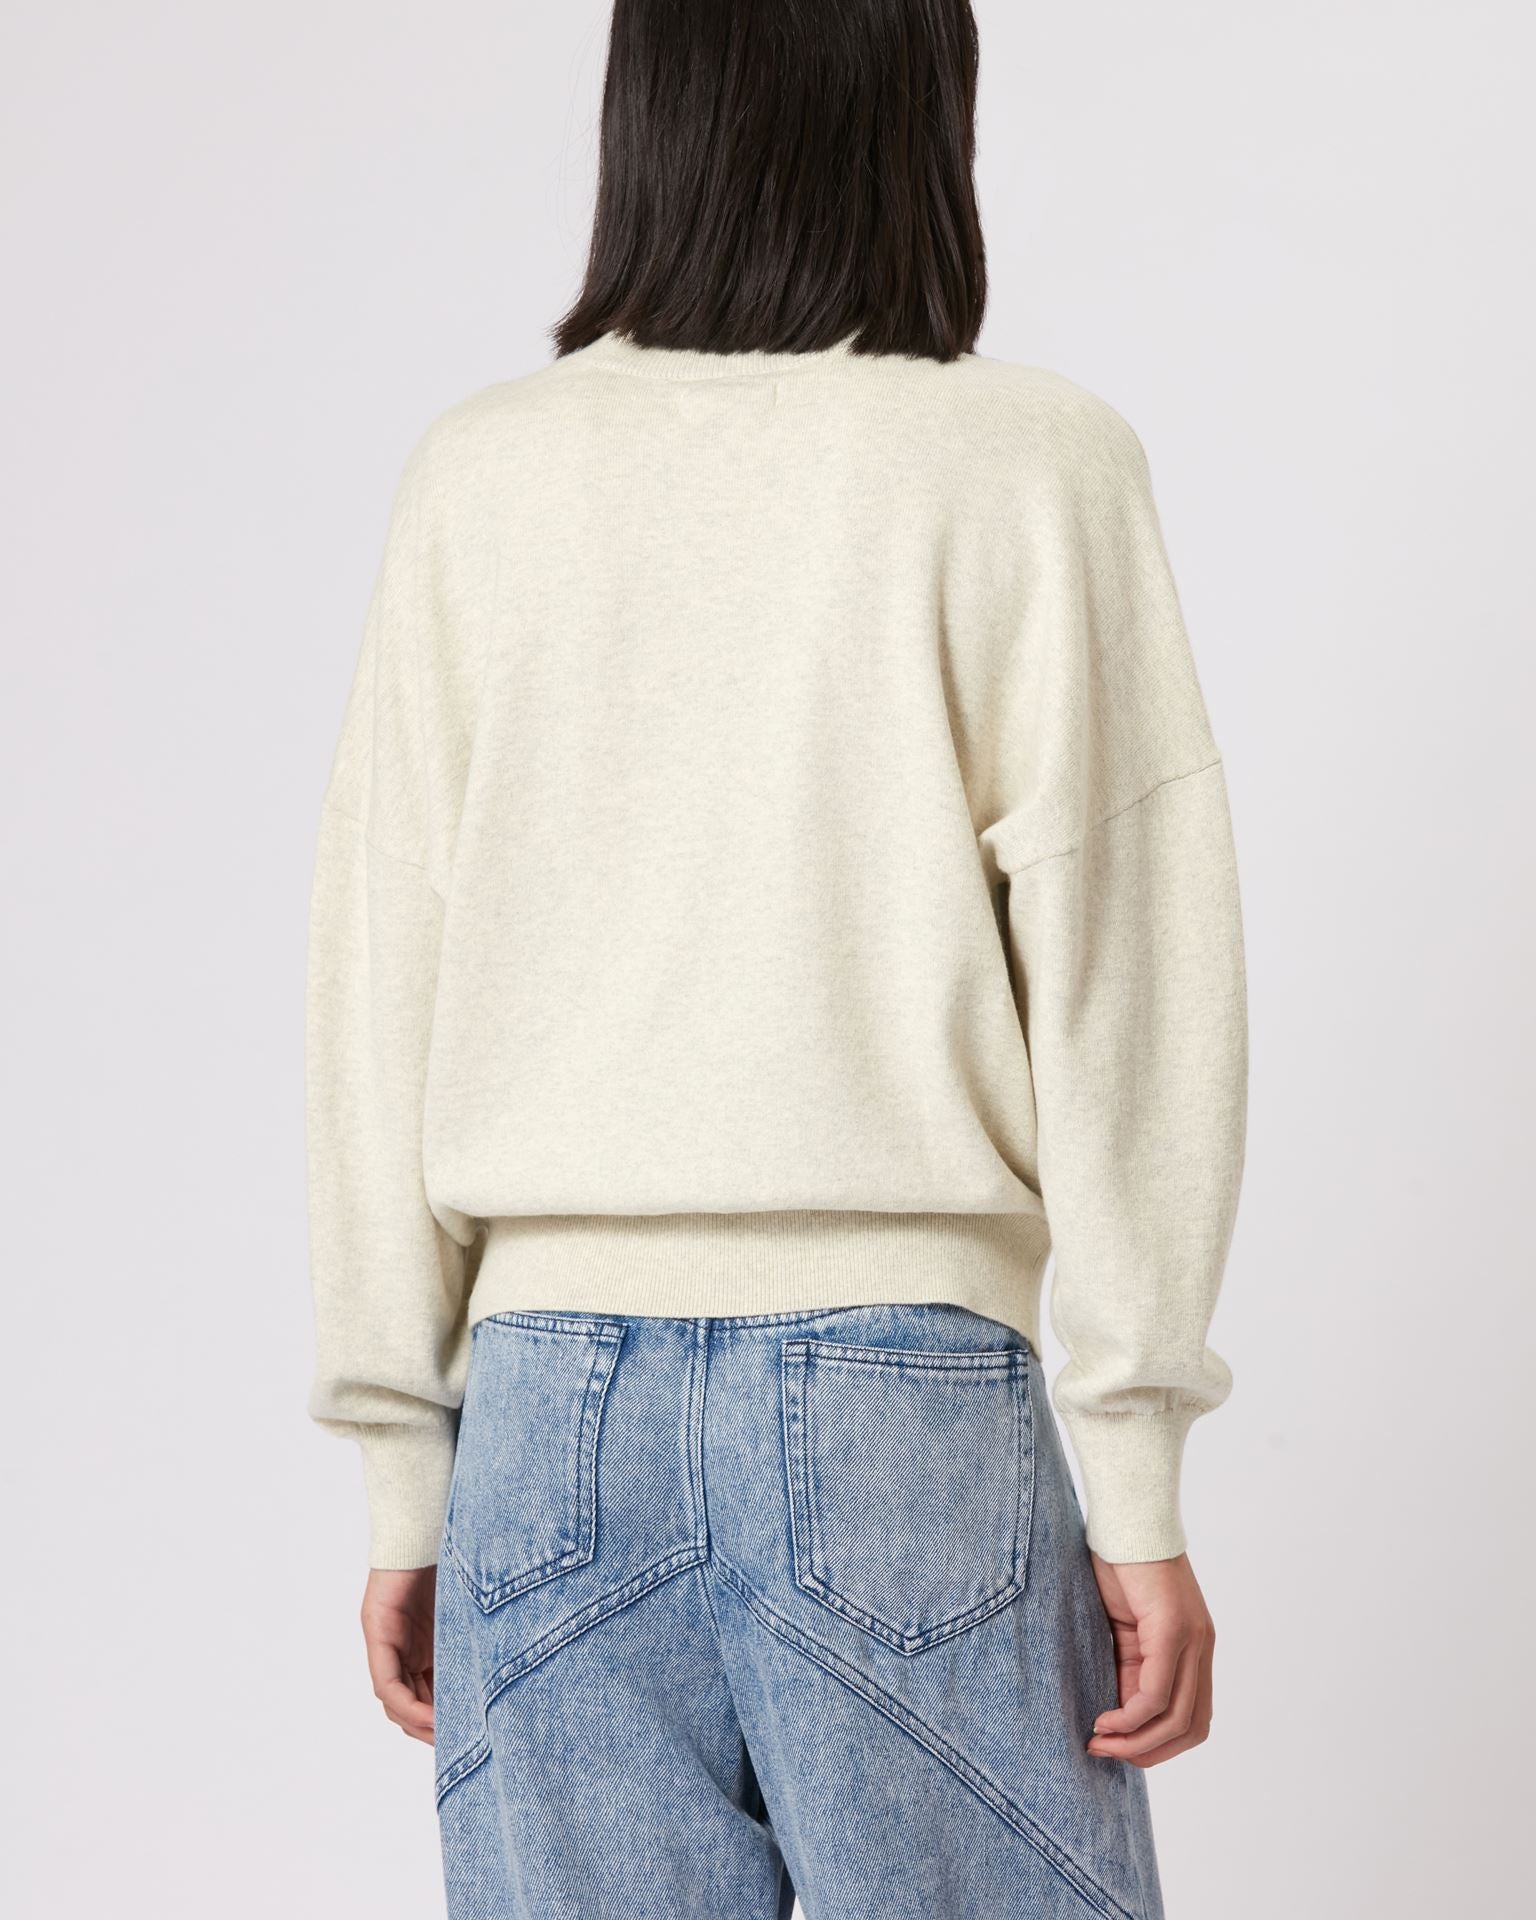 Marisans Cotton Sweater in Light Grey